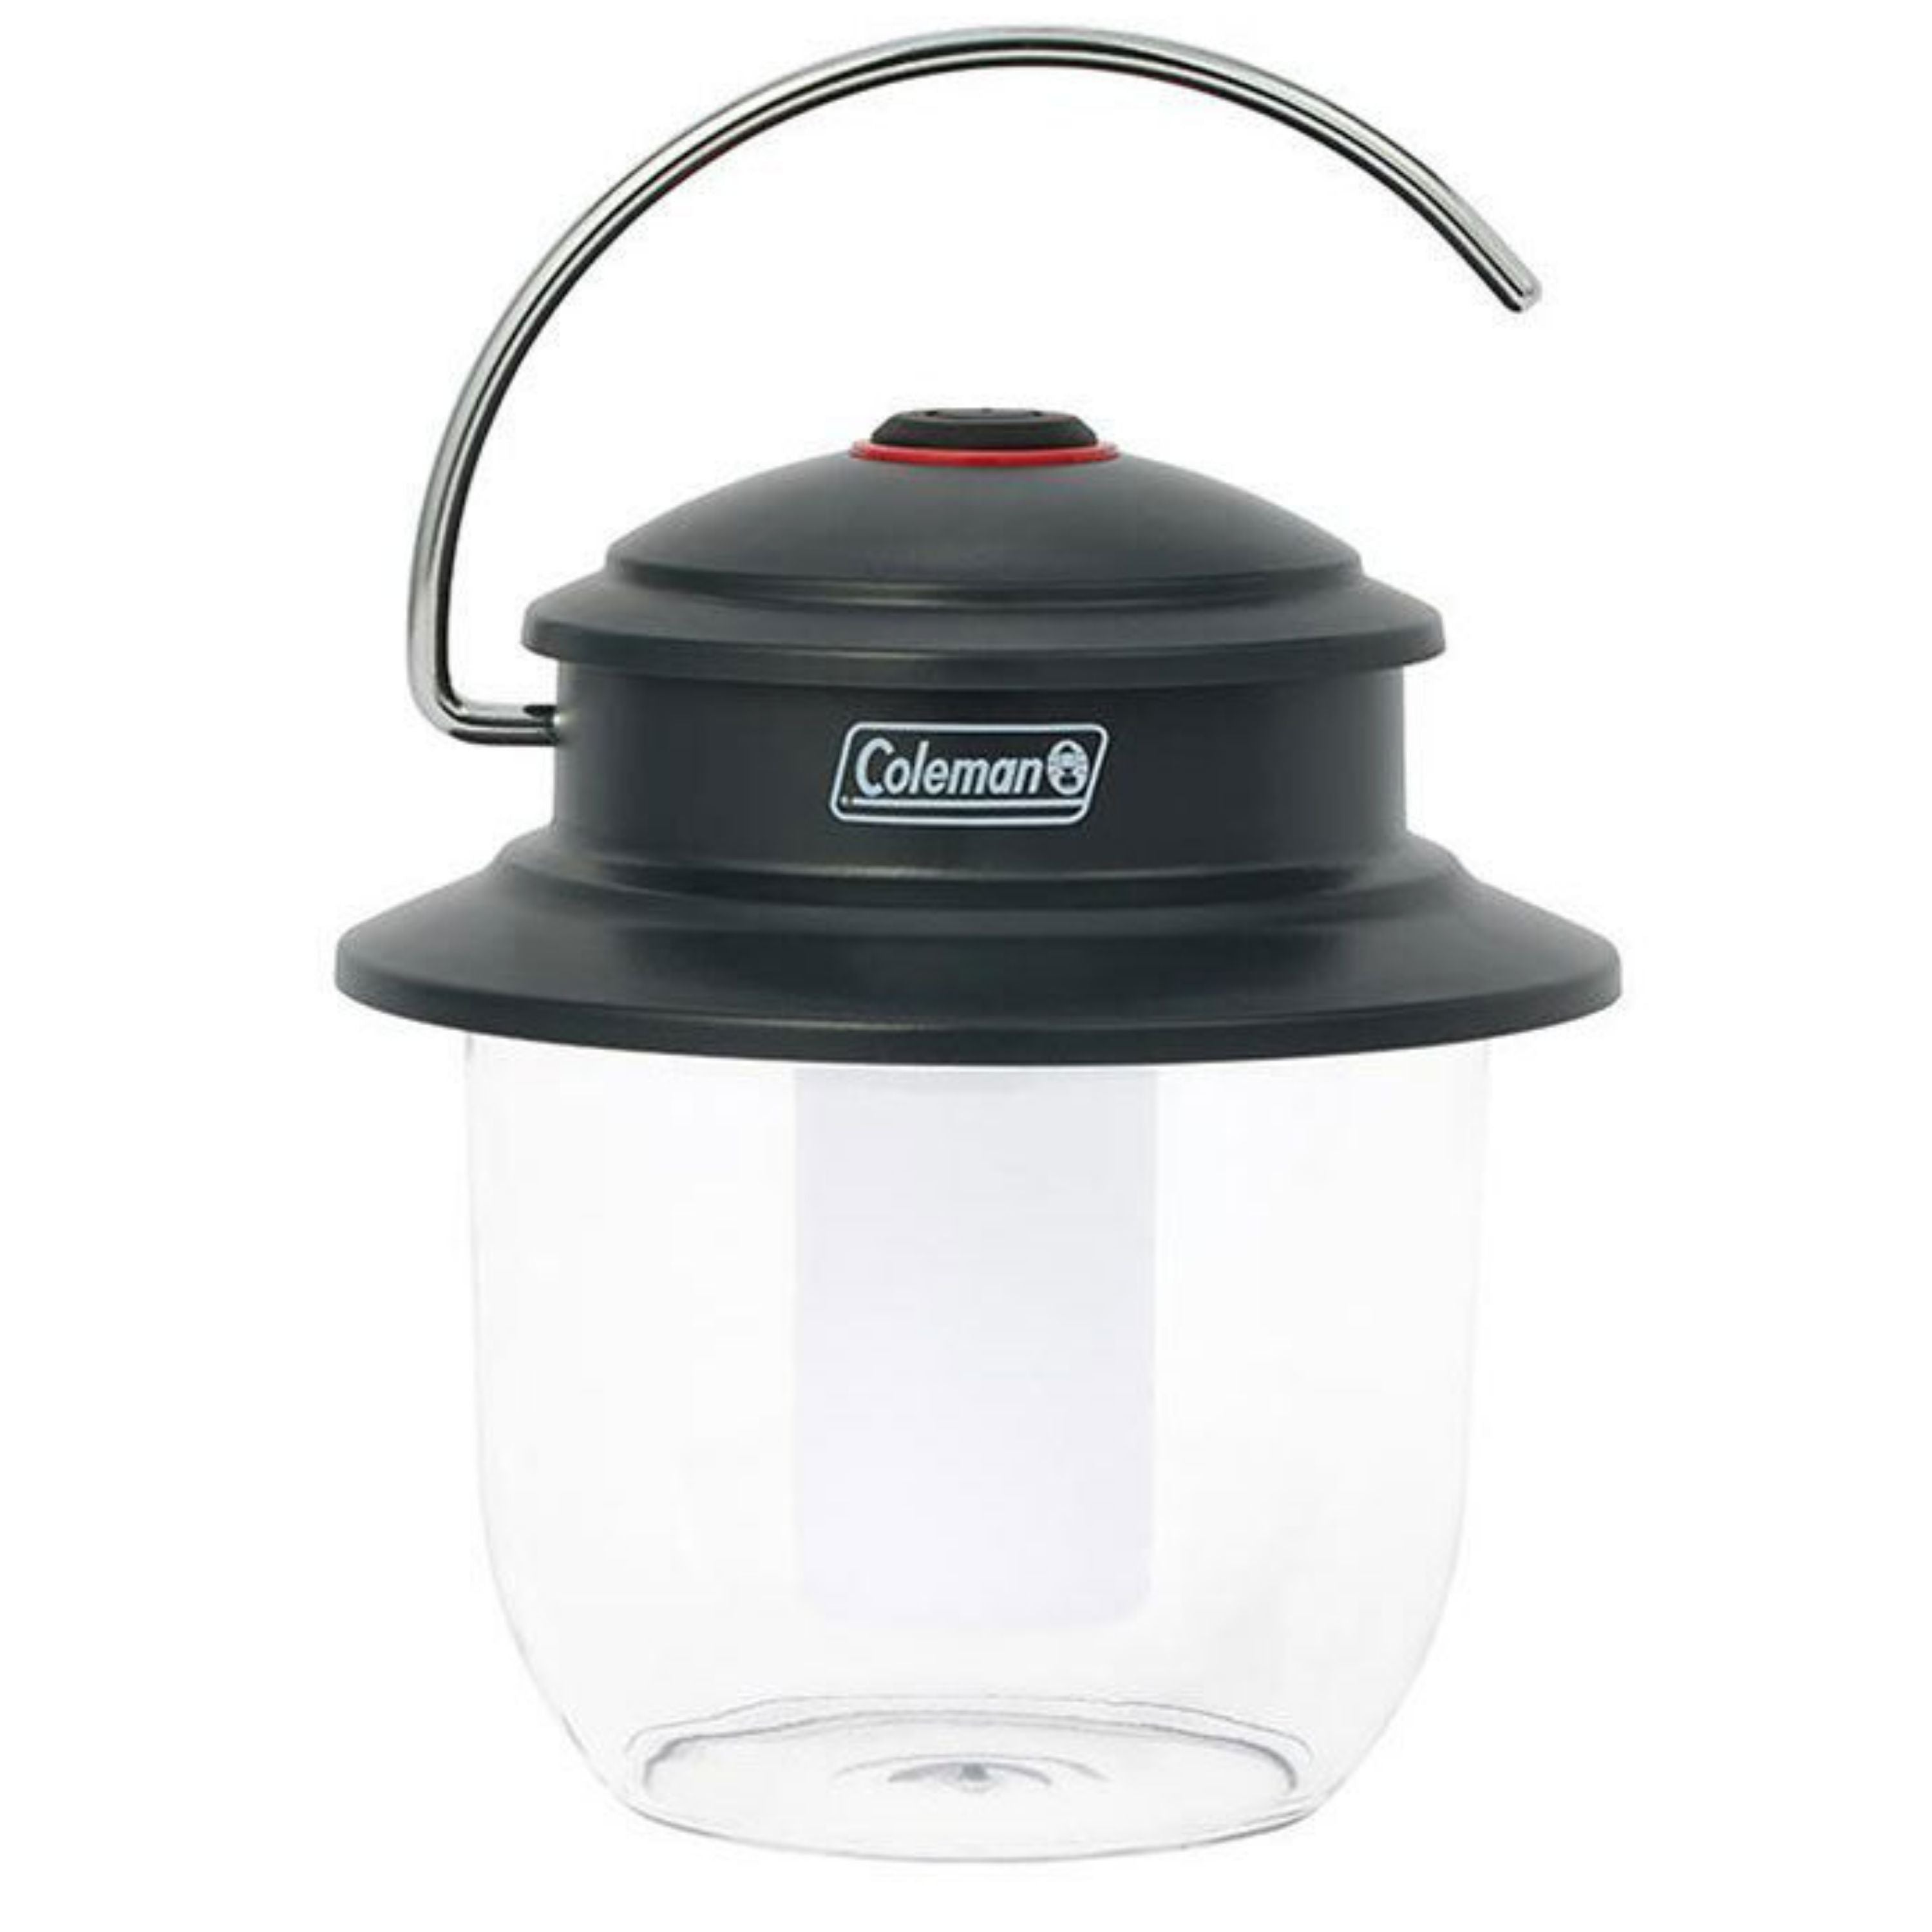 "Classic rechargeable" 400L LED Lantern